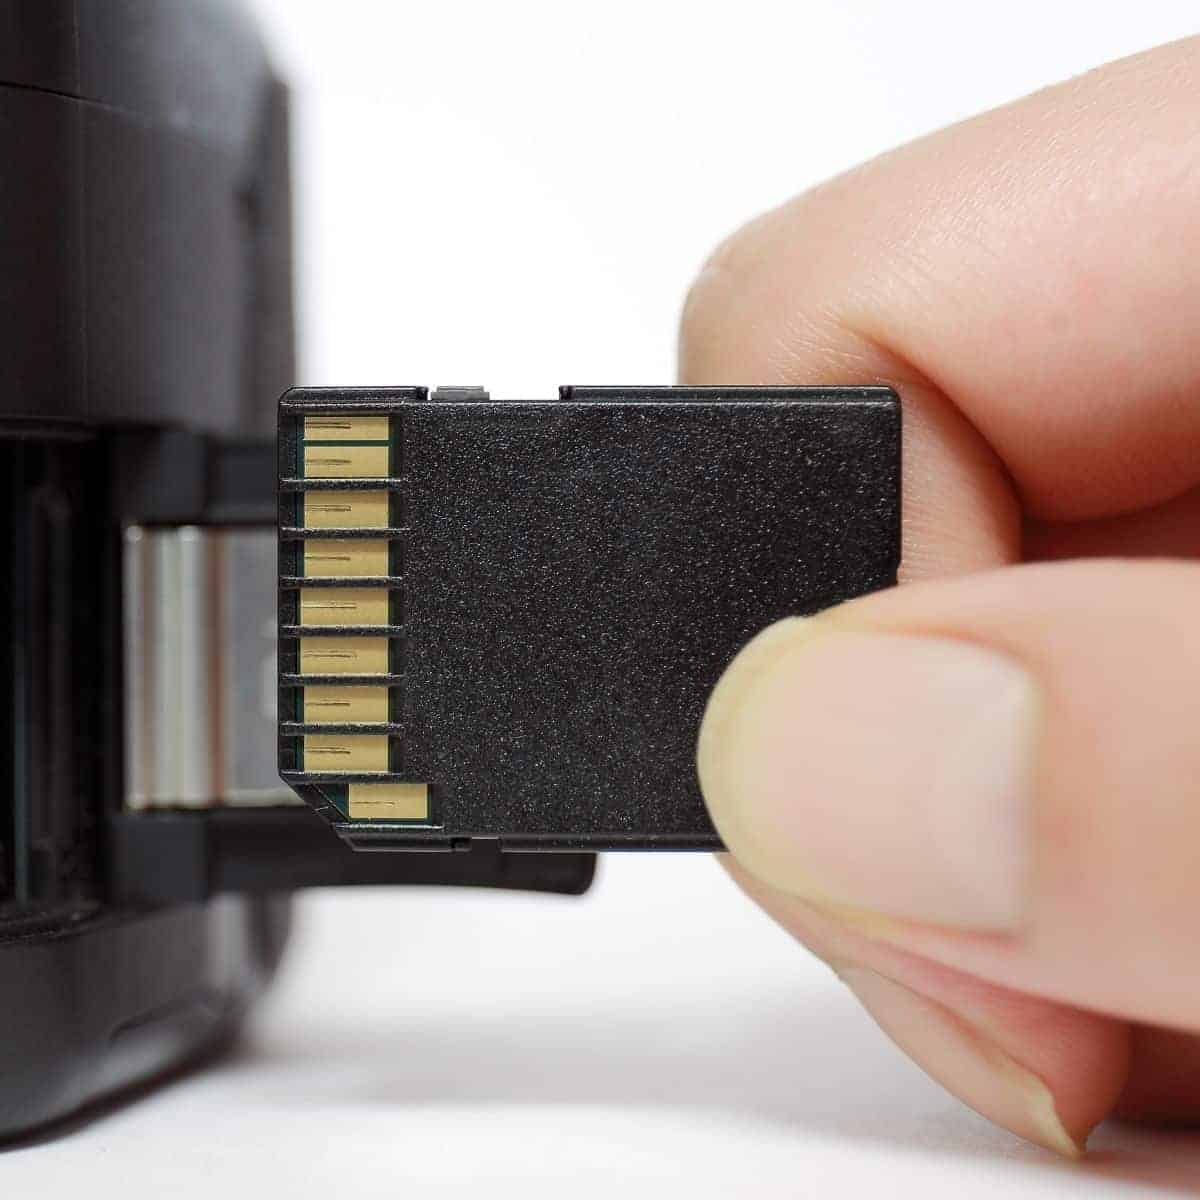 Hand holding an SD card near a camera.